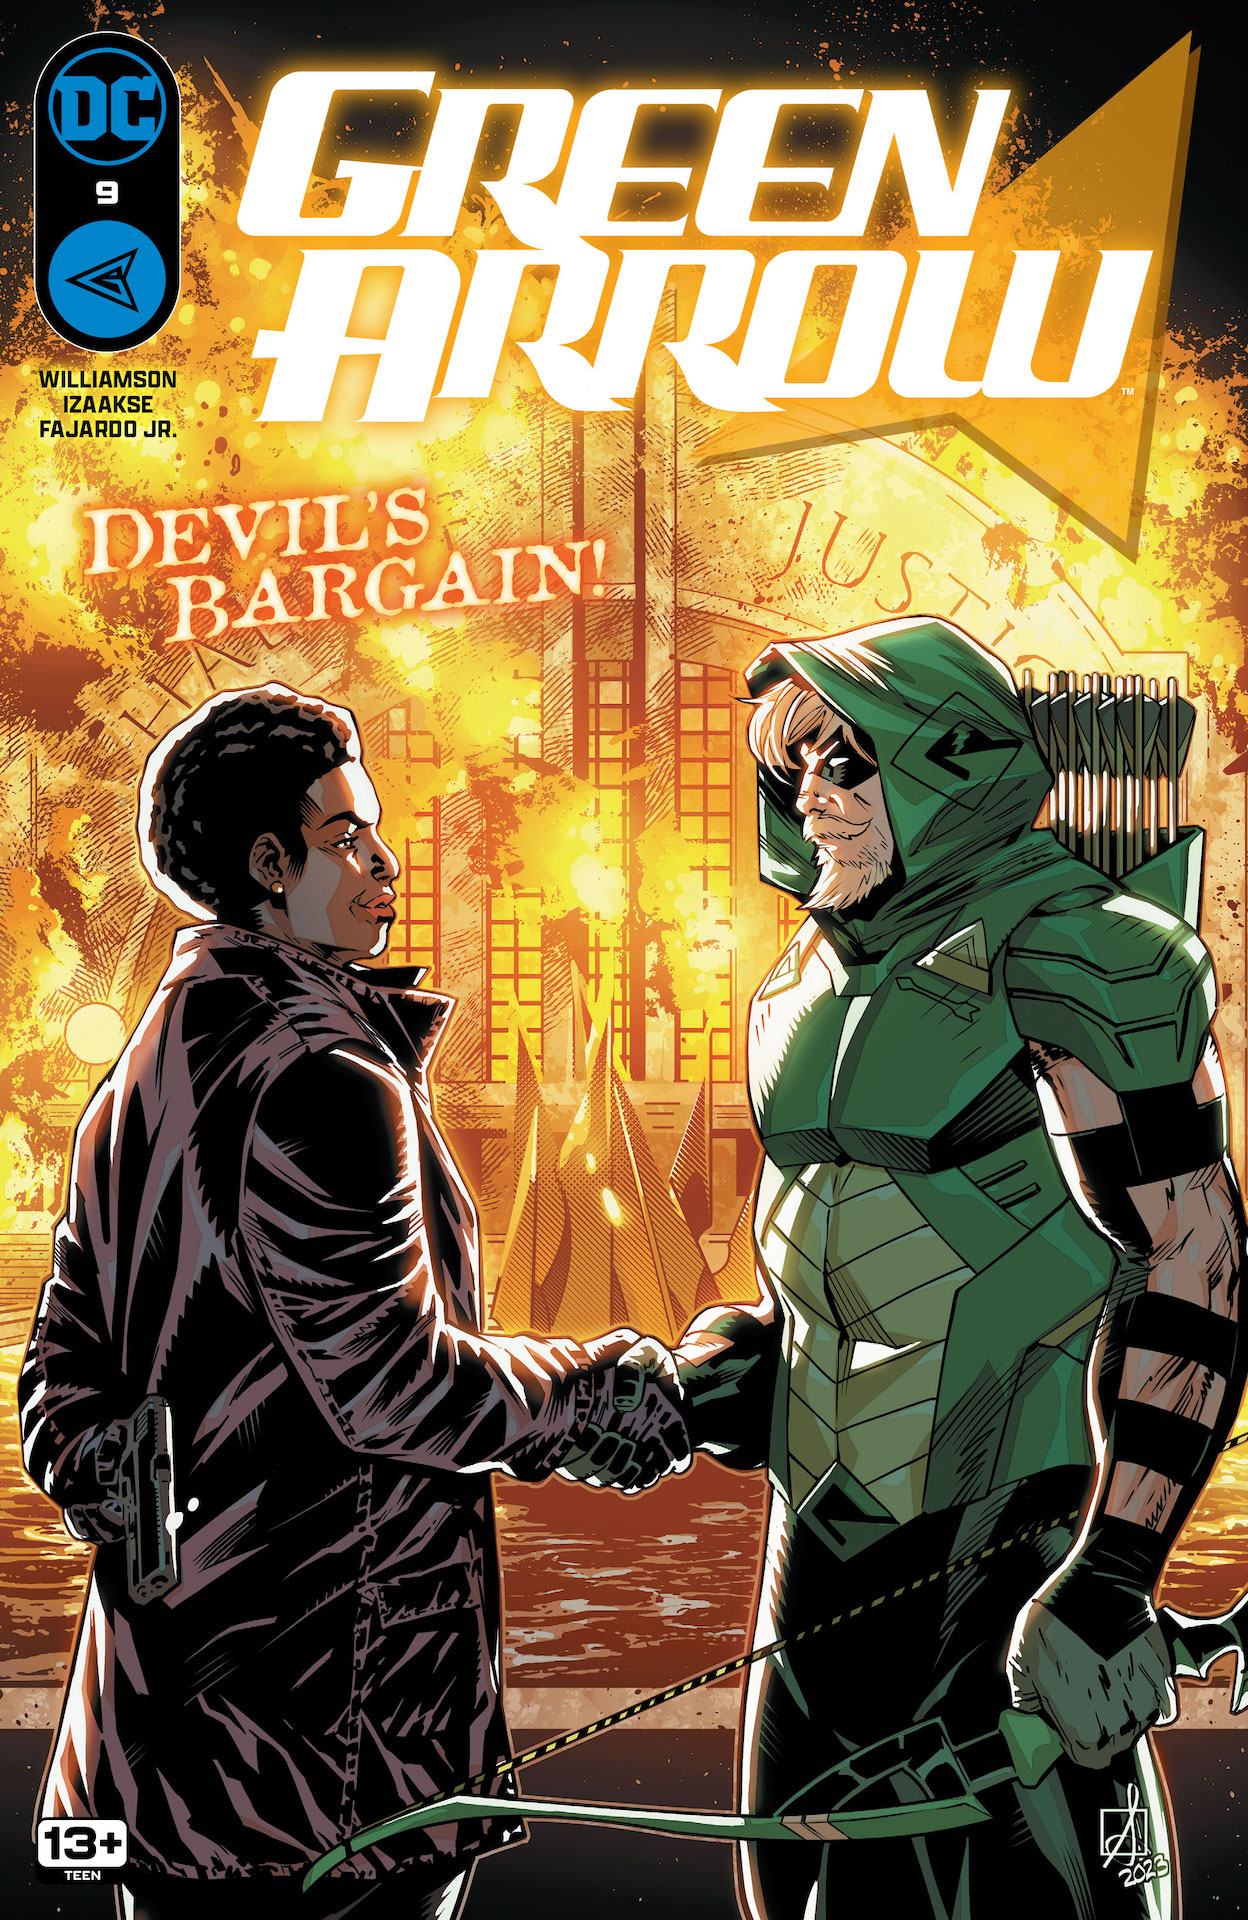 DC Preview: Green Arrow #9